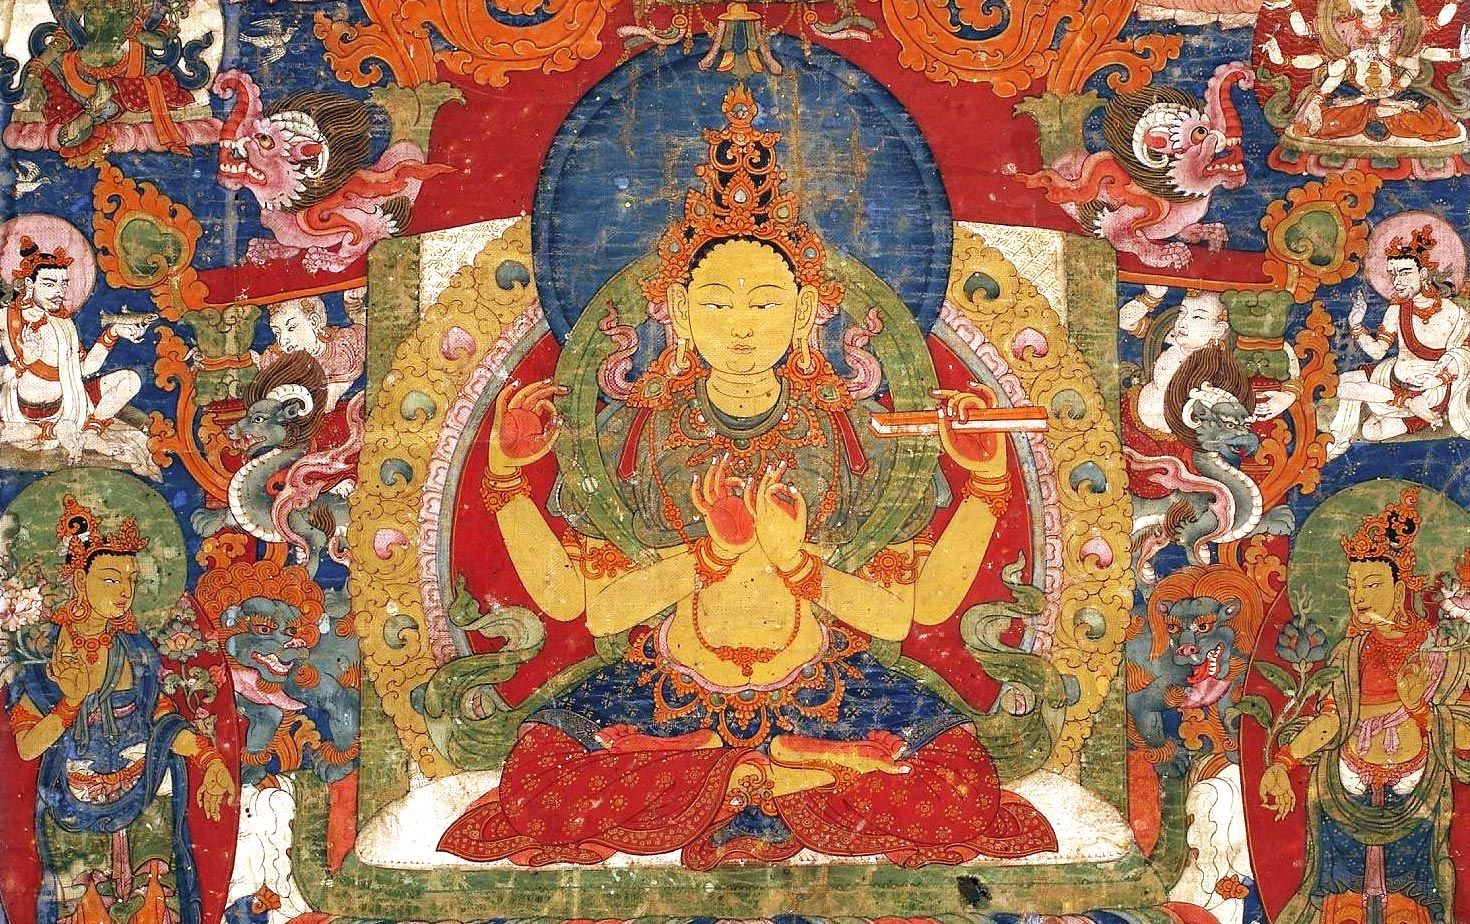 Prajnaparamita: "Perfection of Wisdom"